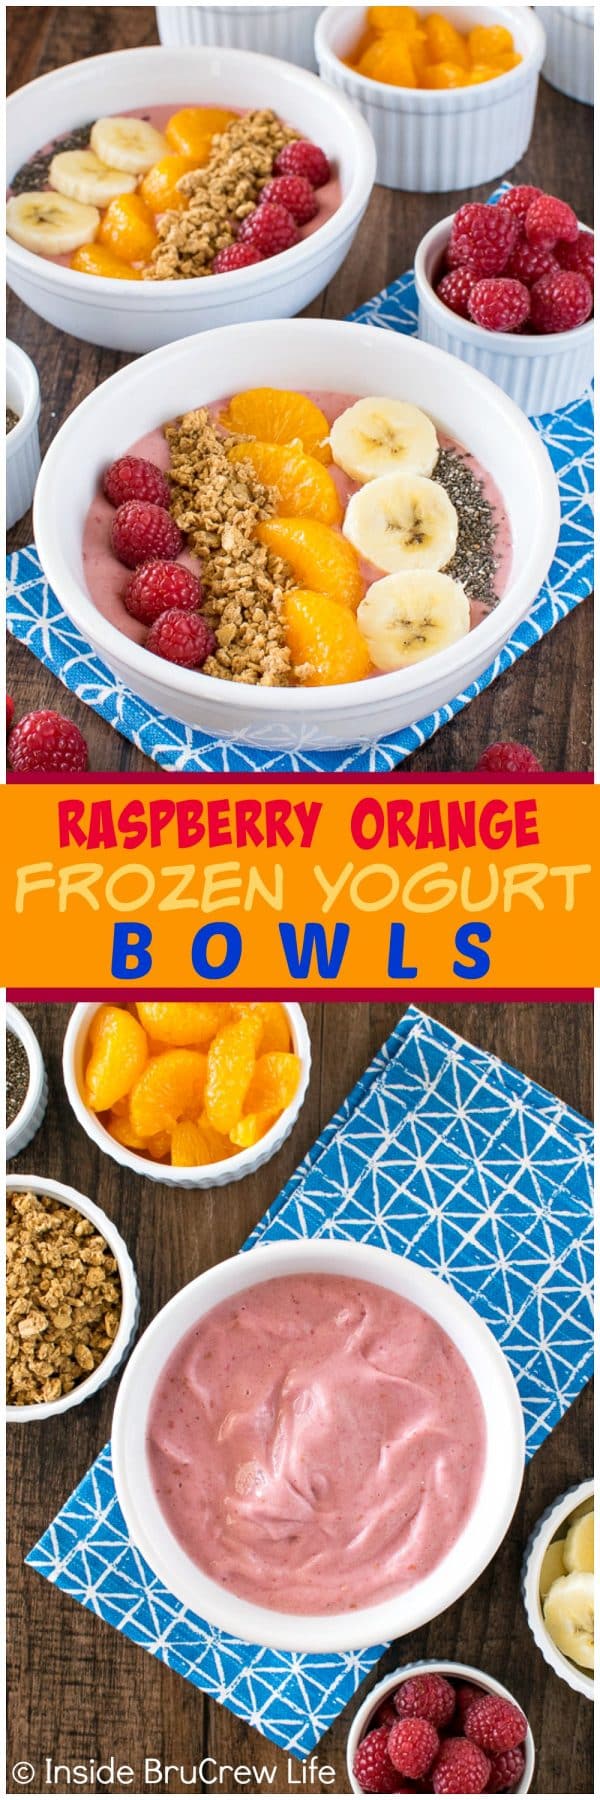 Raspberry Orange Frozen Yogurt Bowls - fresh fruit and granola adds a fun twist to this healthy frozen snack recipe.